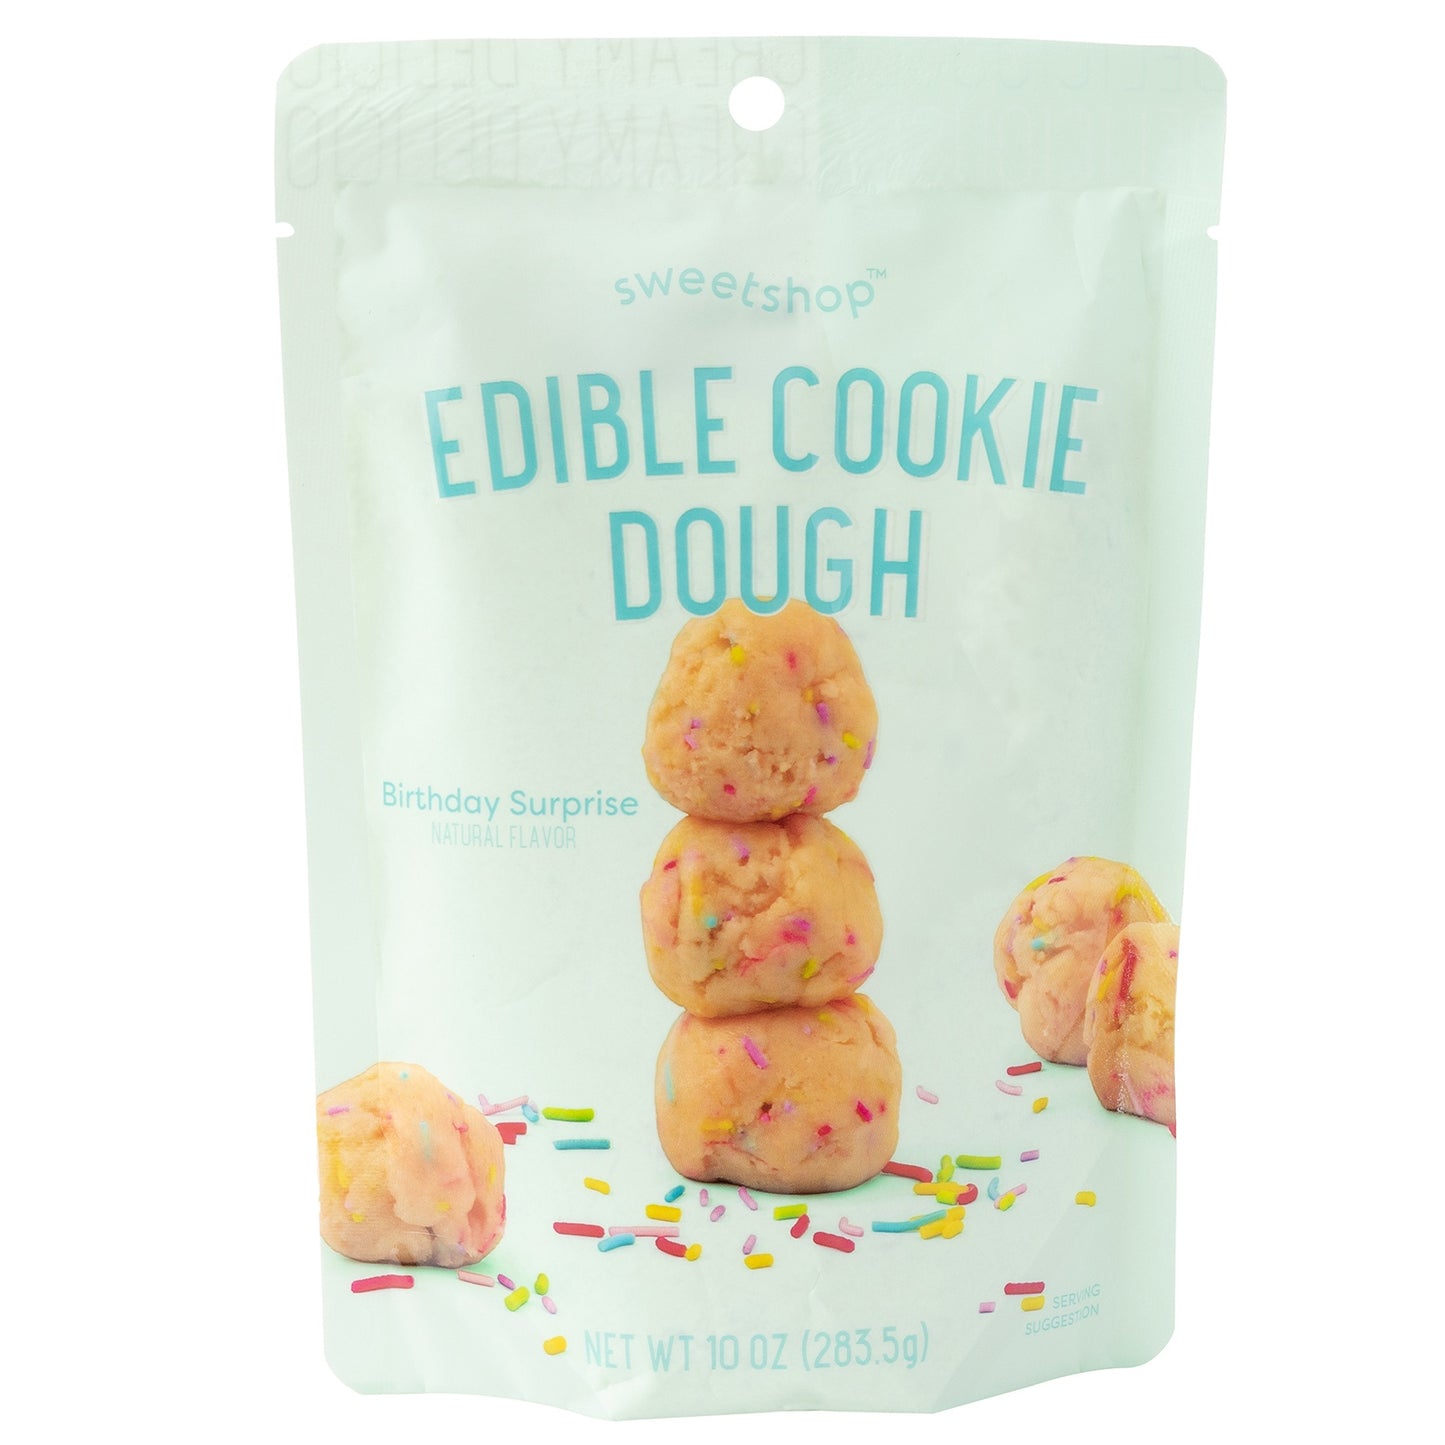 Sweetshop Edible Cookie Dough 10oz-Birthday Surprise